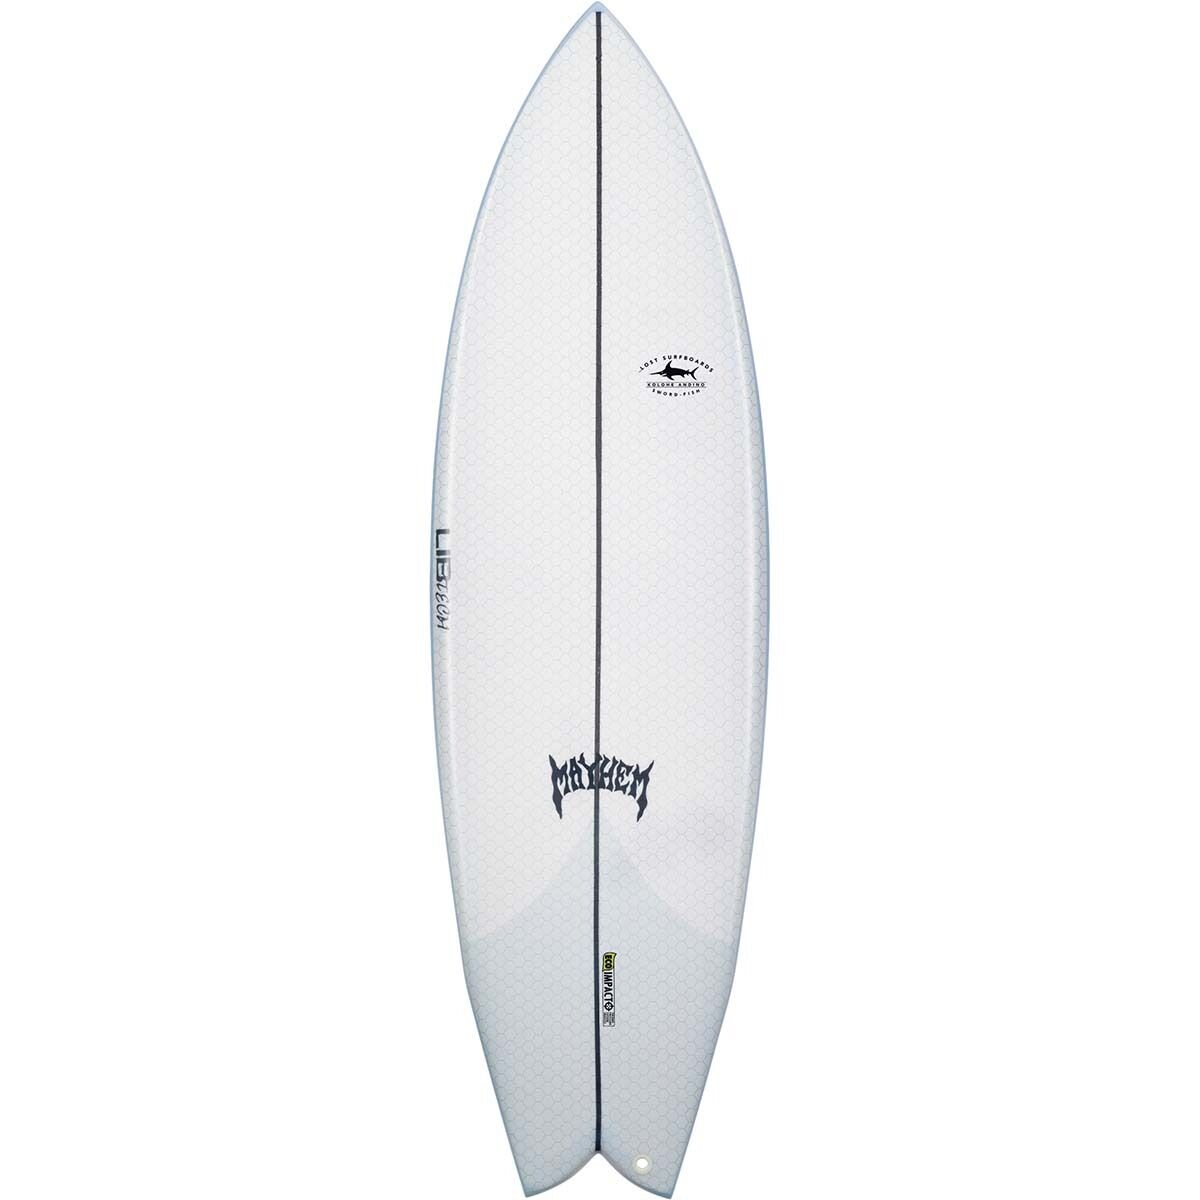 Lib Technologies Lost Ka Swordfish Surfboard